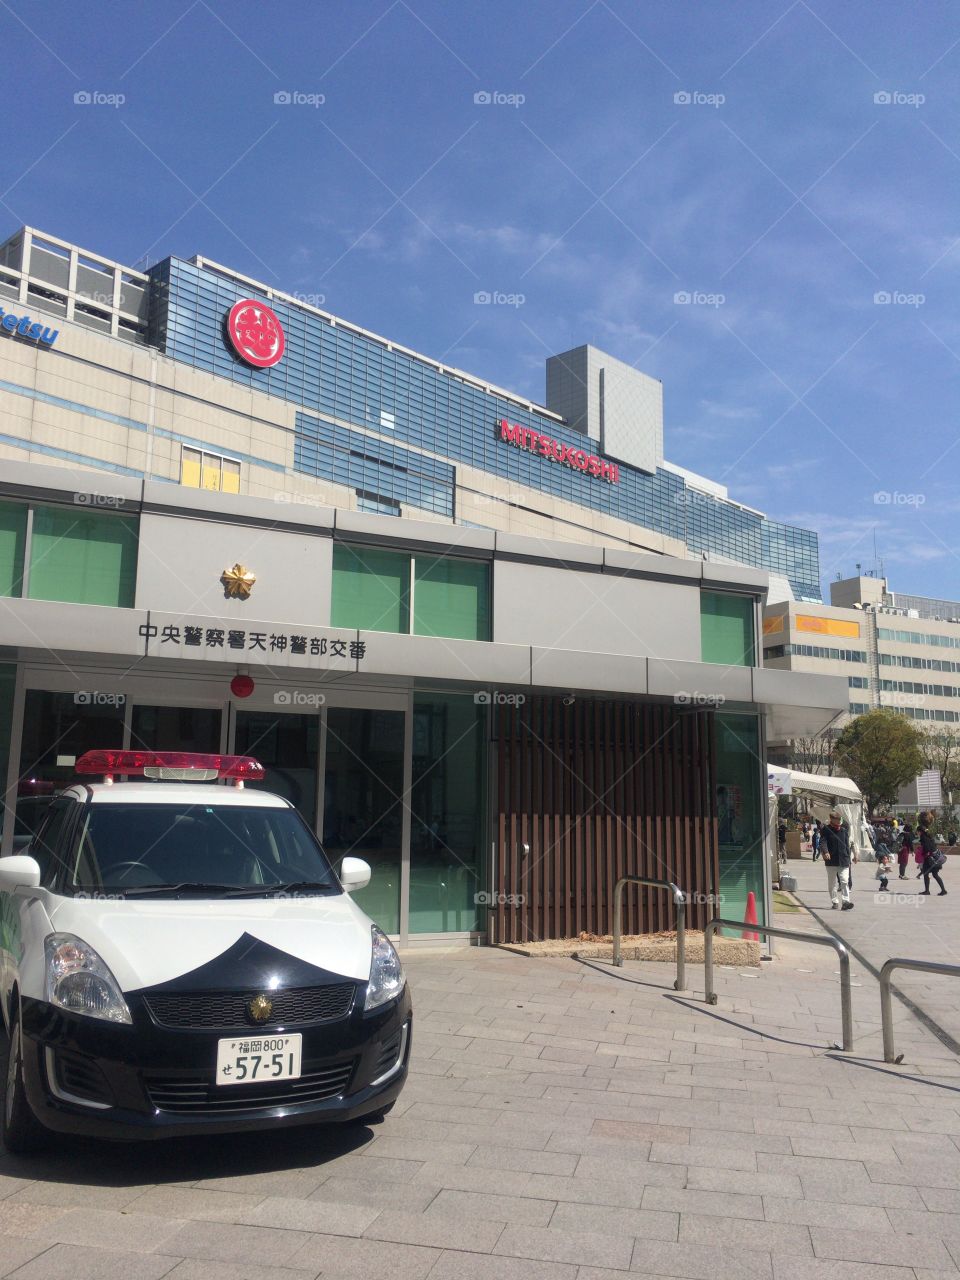 Police station at Tenjin